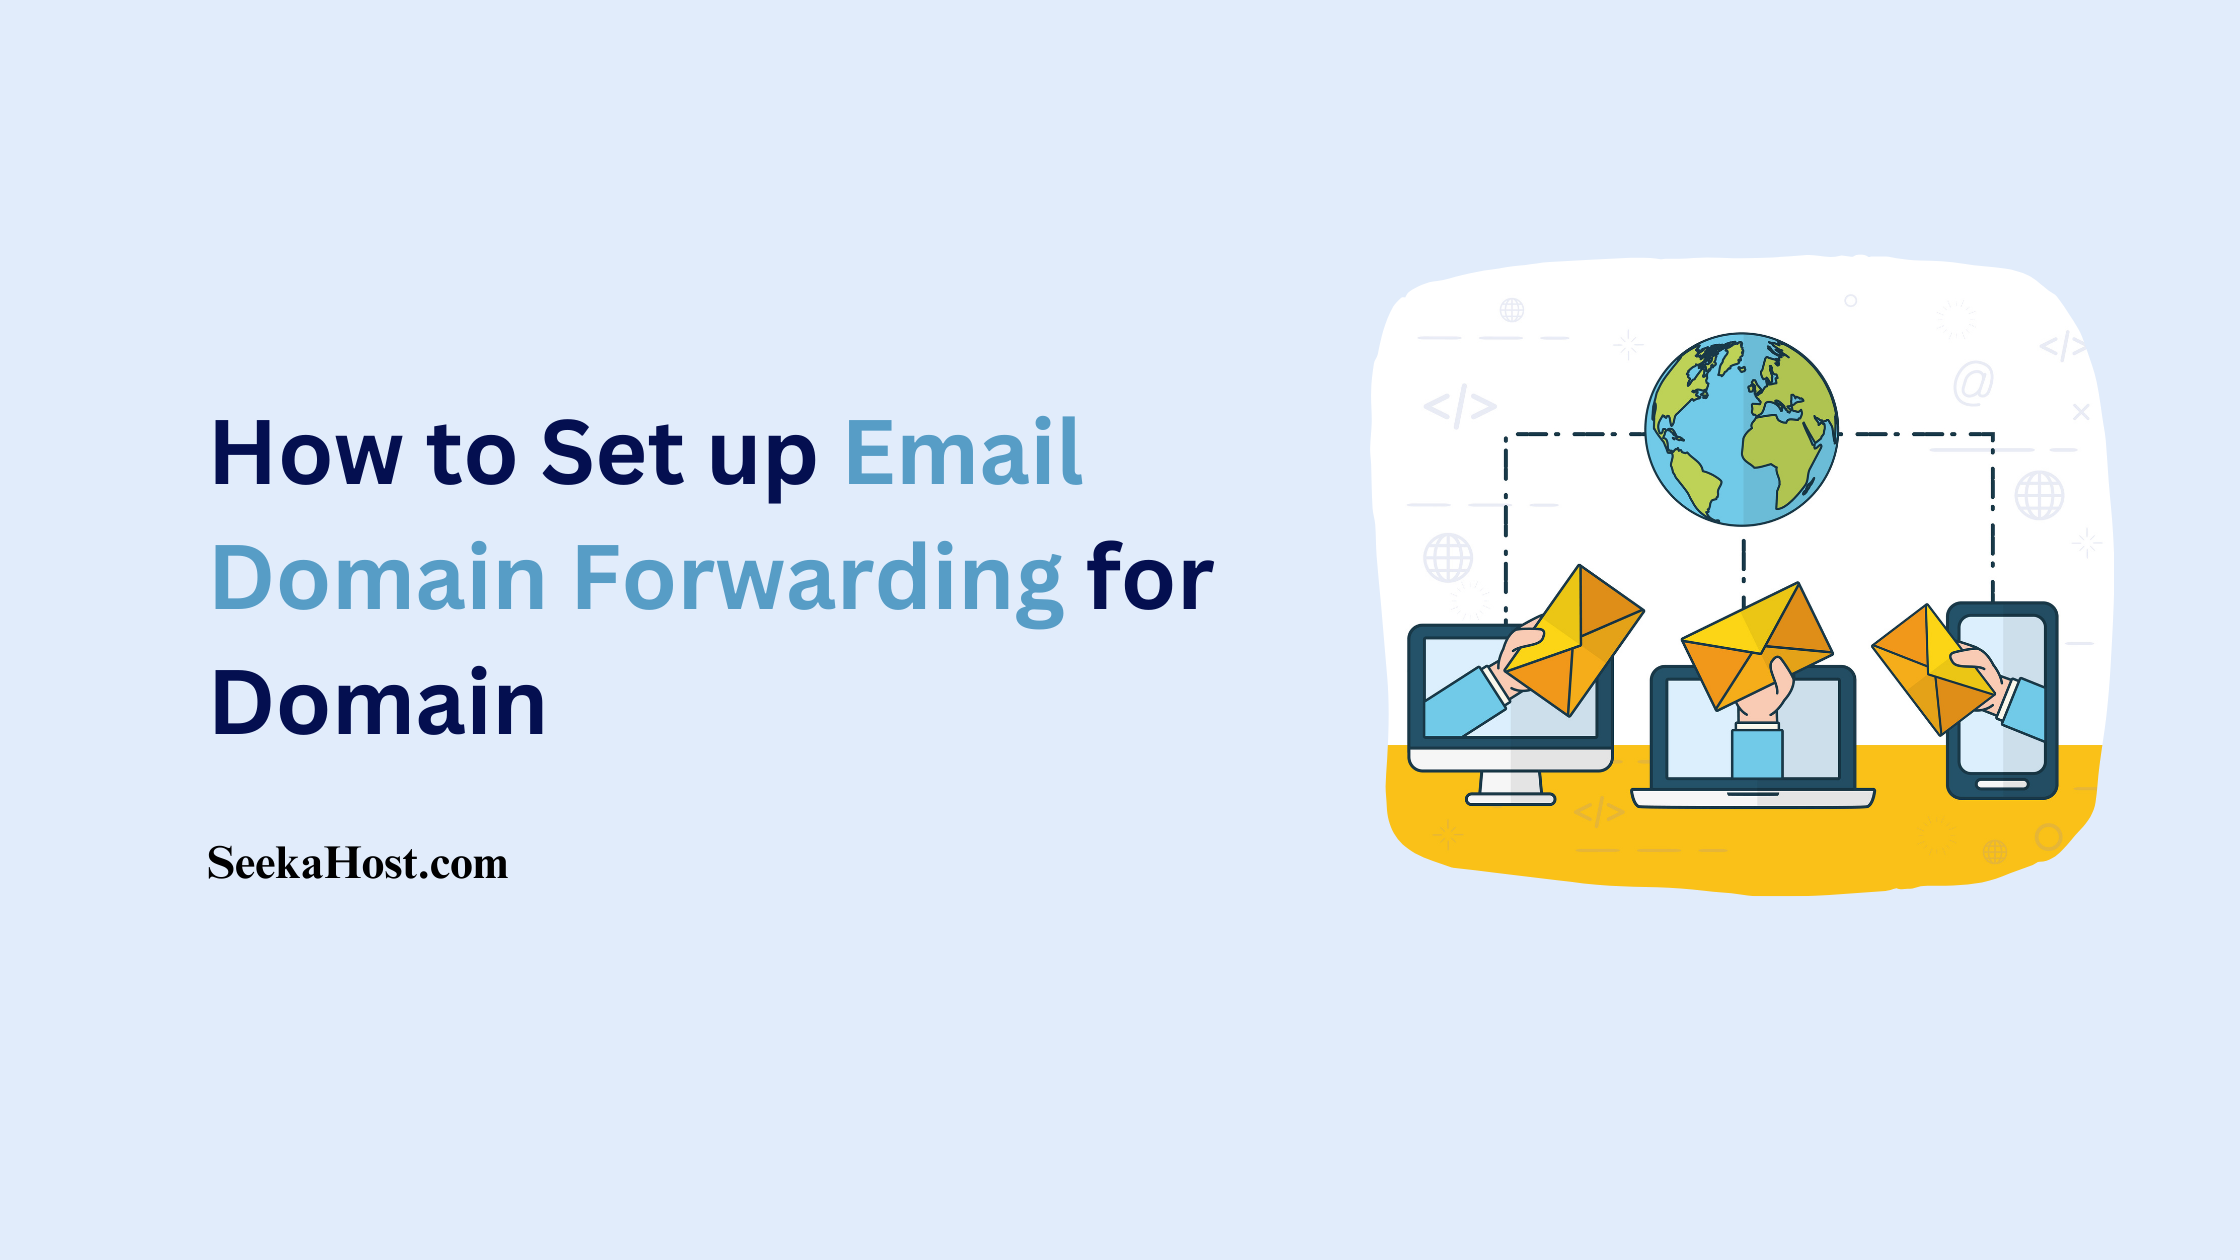 Email Domain Forwarding